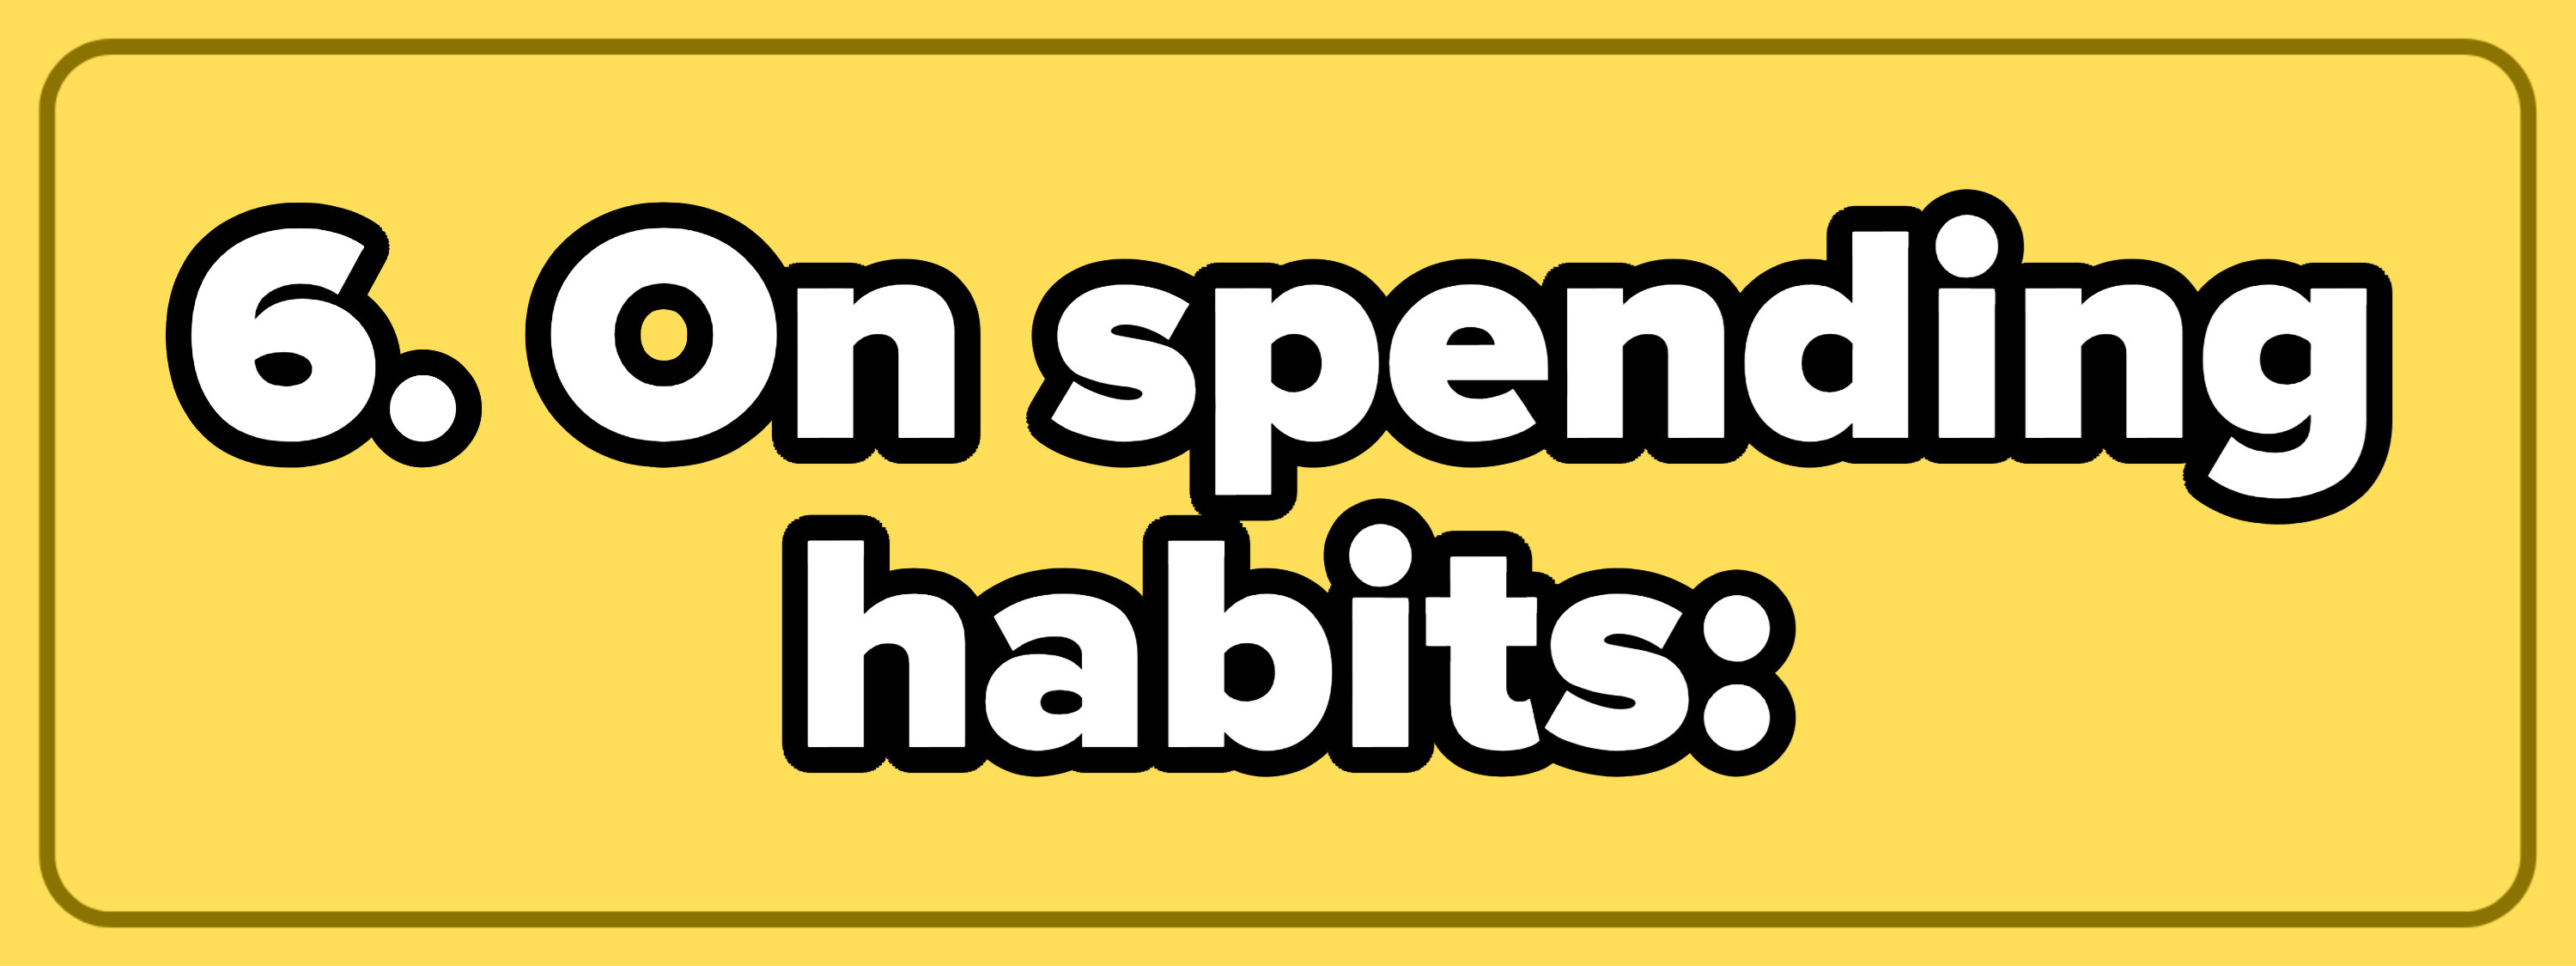 6. On spending habits: